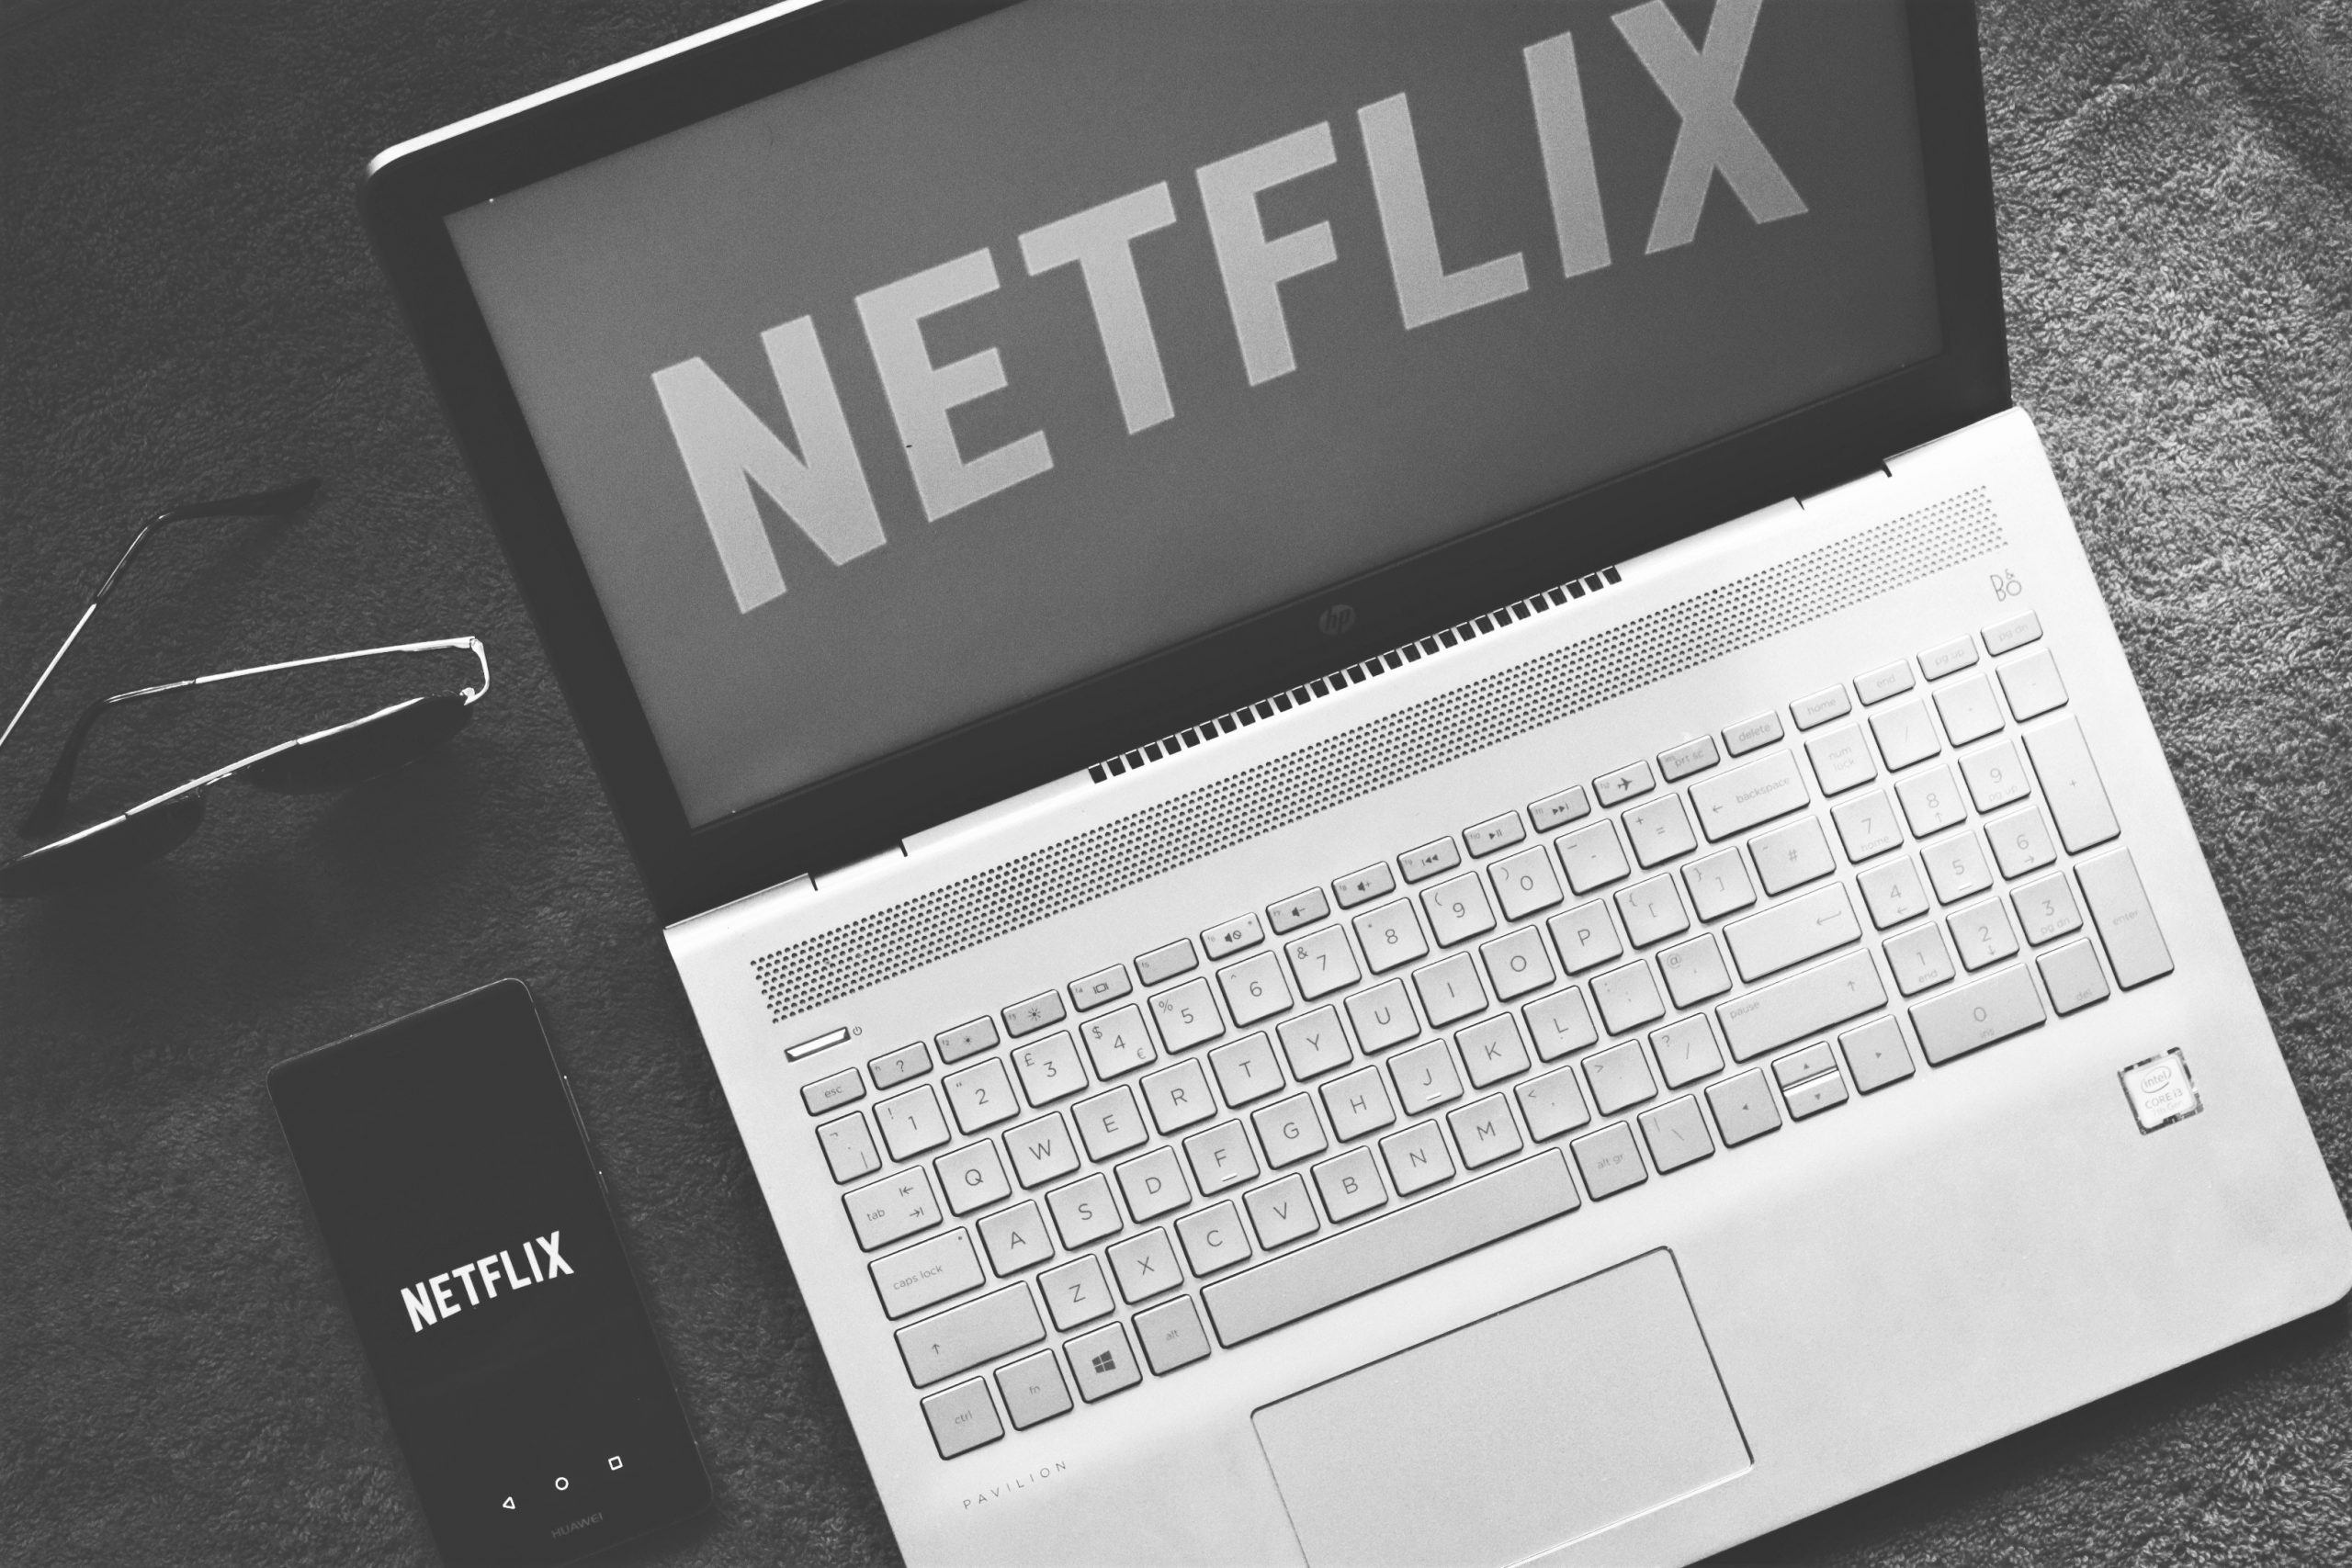 Netflix Plans $850 Million New Jersey Production Facility Amid Streaming Wars